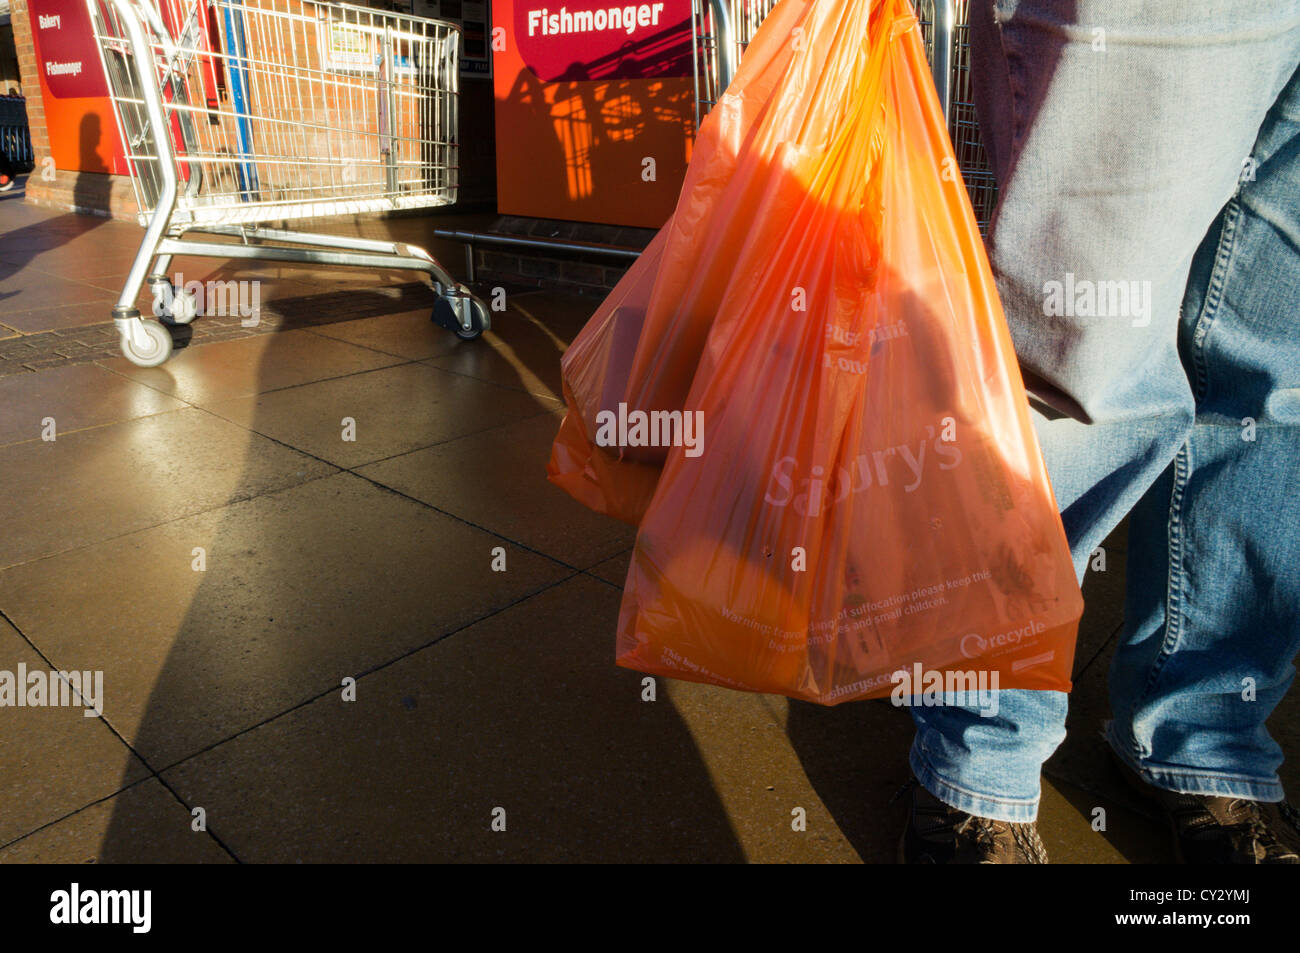 2600 Orange In Plastic Bag Stock Photos Pictures  RoyaltyFree Images   iStock